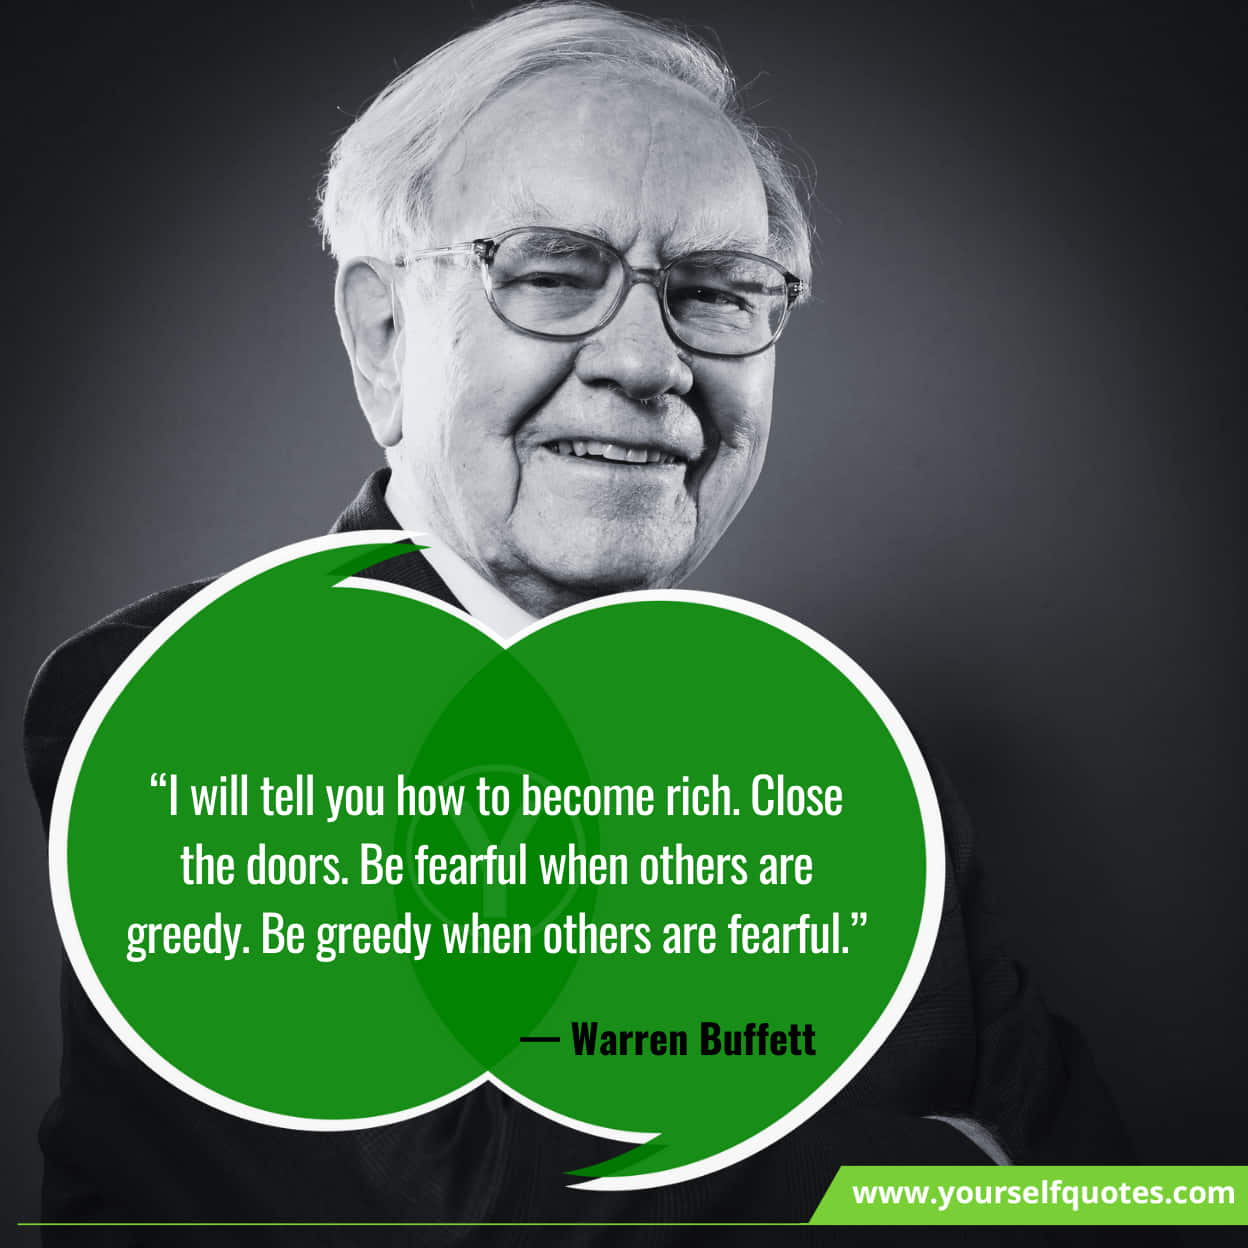 Latest Stock Market Quotes By Warren Buffett